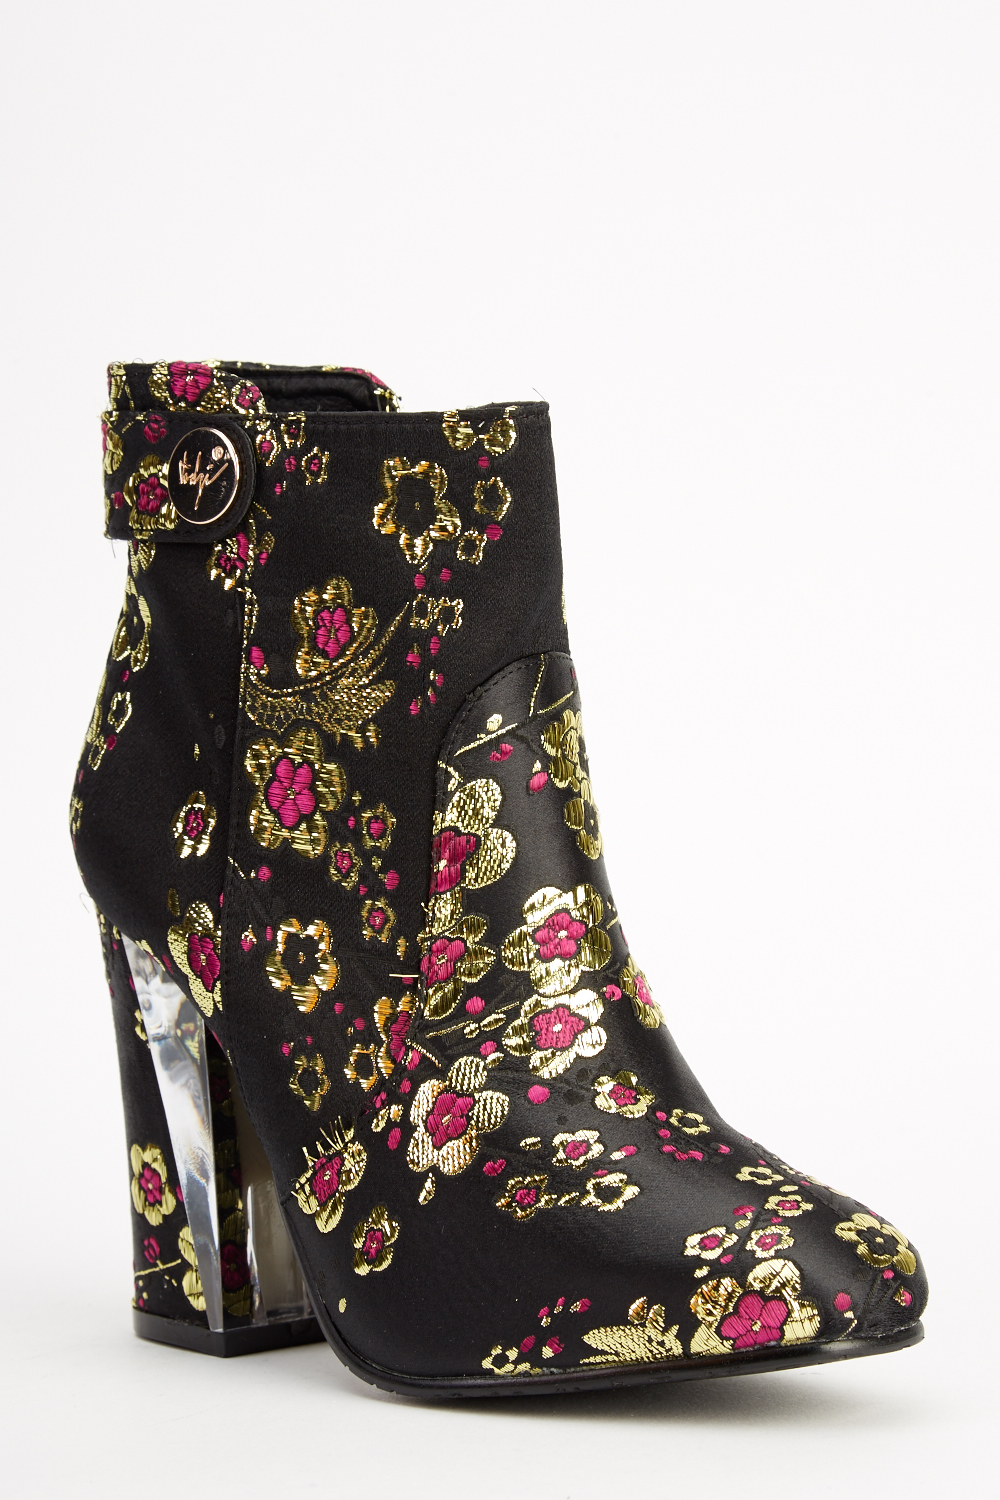 Sergio Todzi Metallic Floral Gold Heeled Boots - Limited edition ...